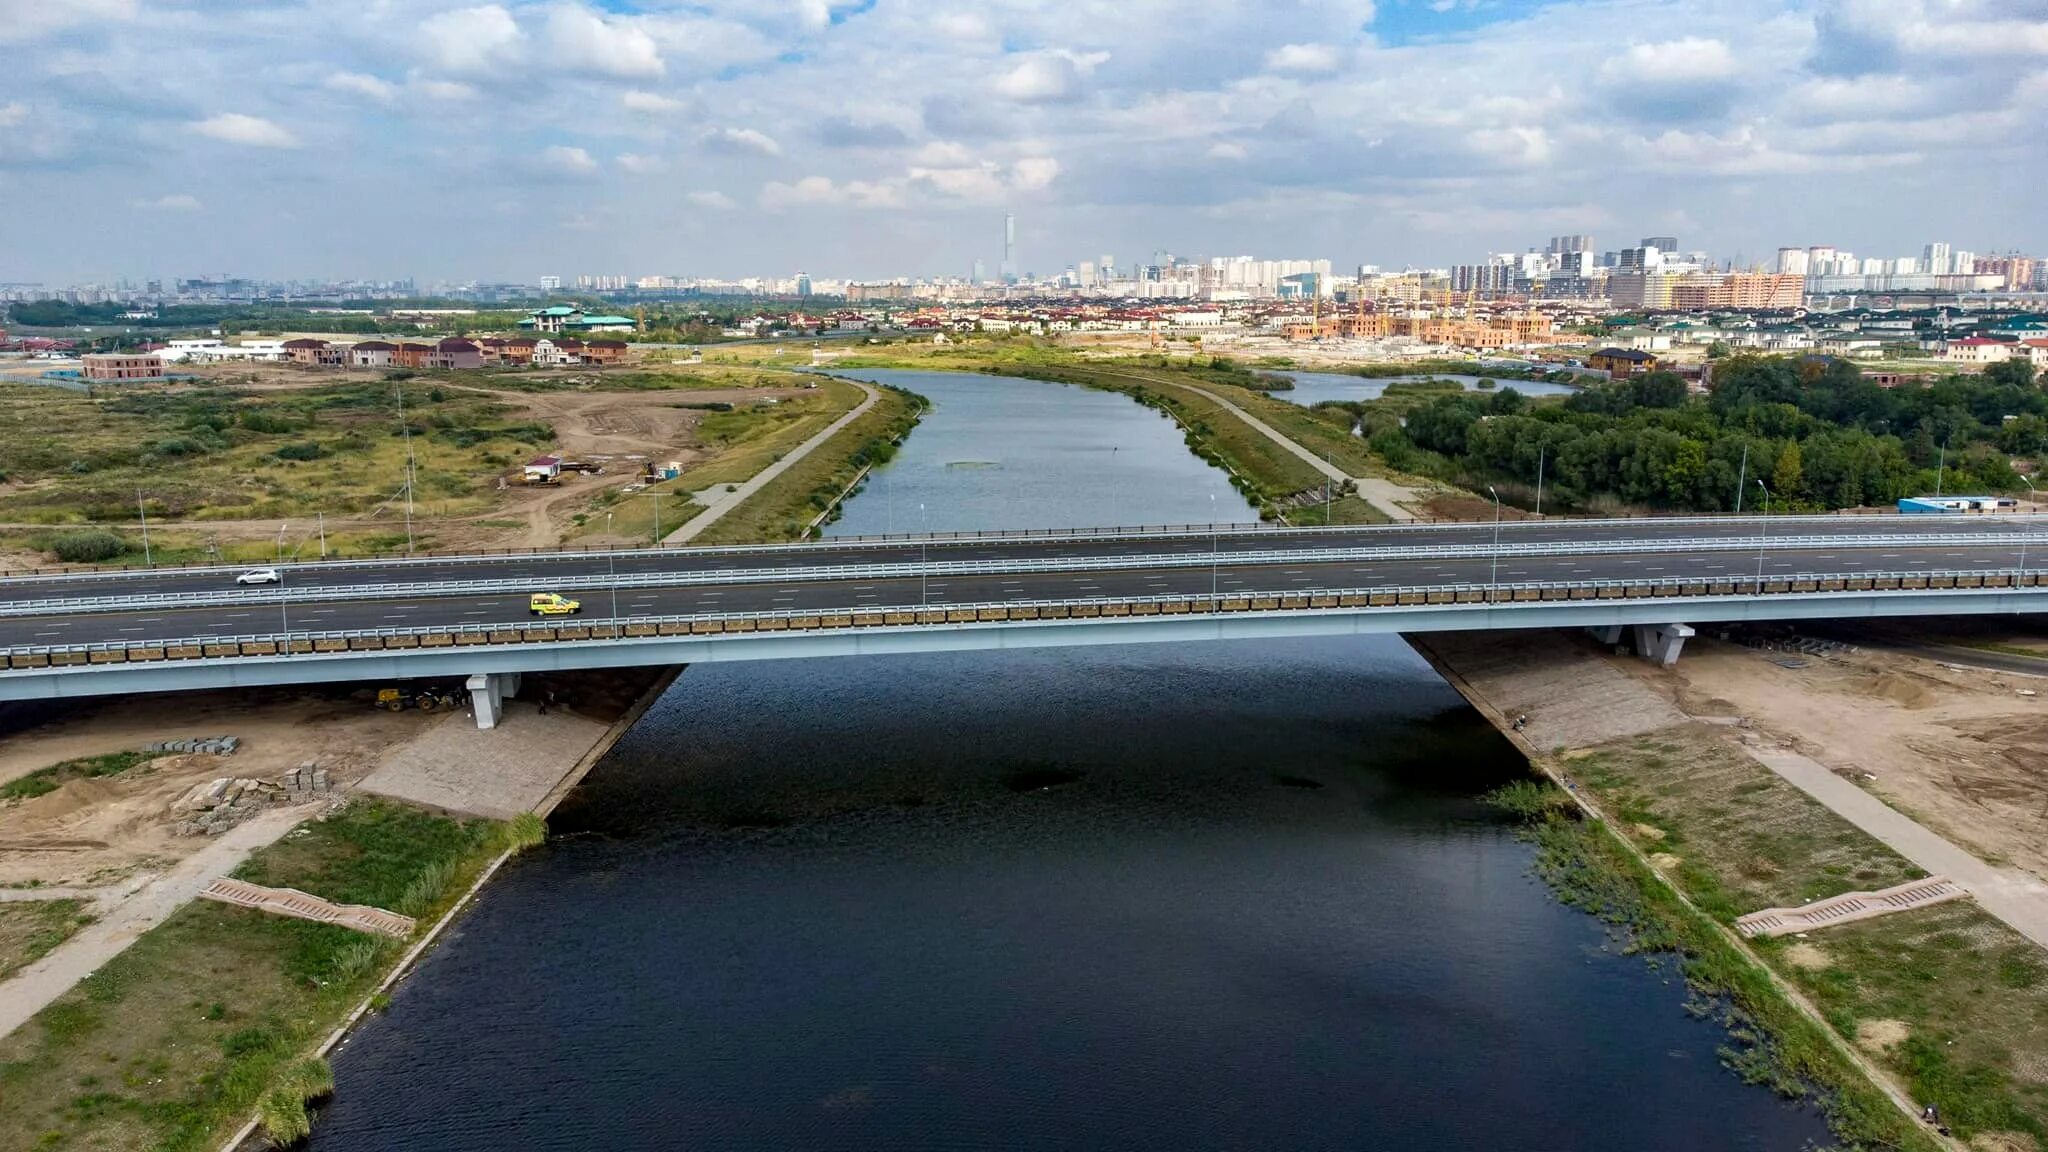 Открыли новый мост. Астана мост. Мост в Астане новый. Мост Астана набережная. Новый мост набережная Астаны.